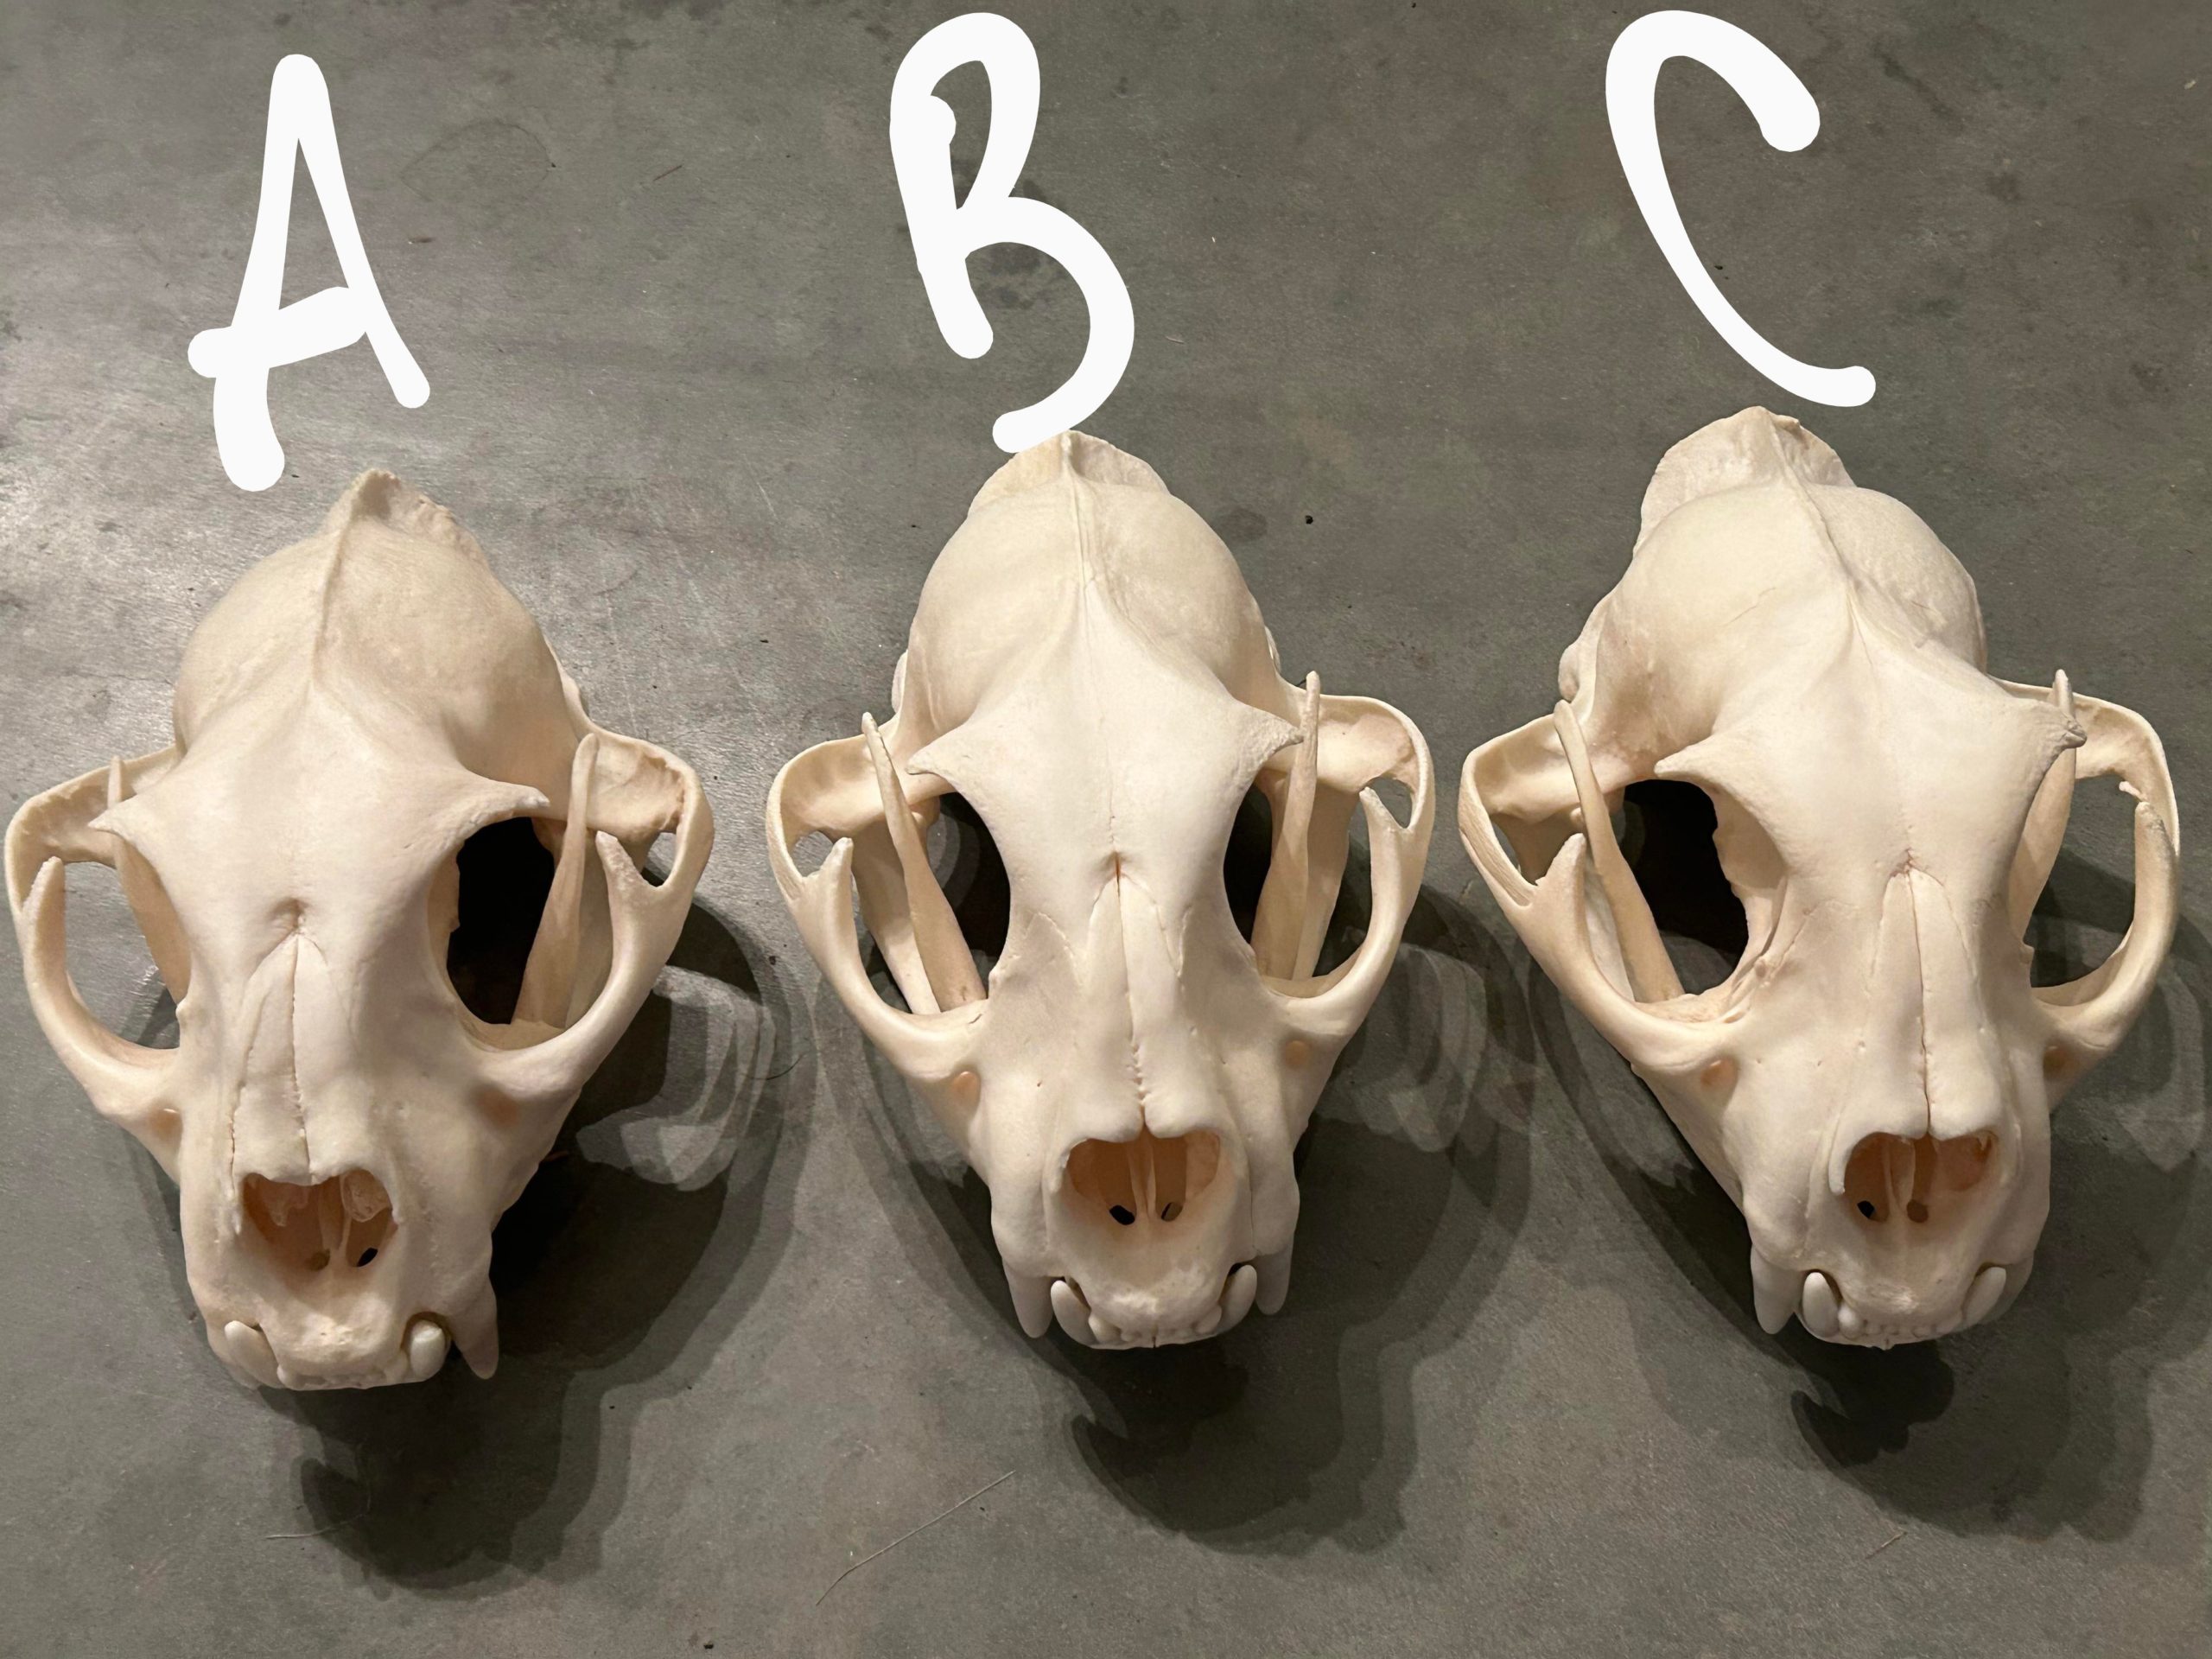 Cougar Skulls #00571 - Craniates Curiosites: Oddity Sales and 